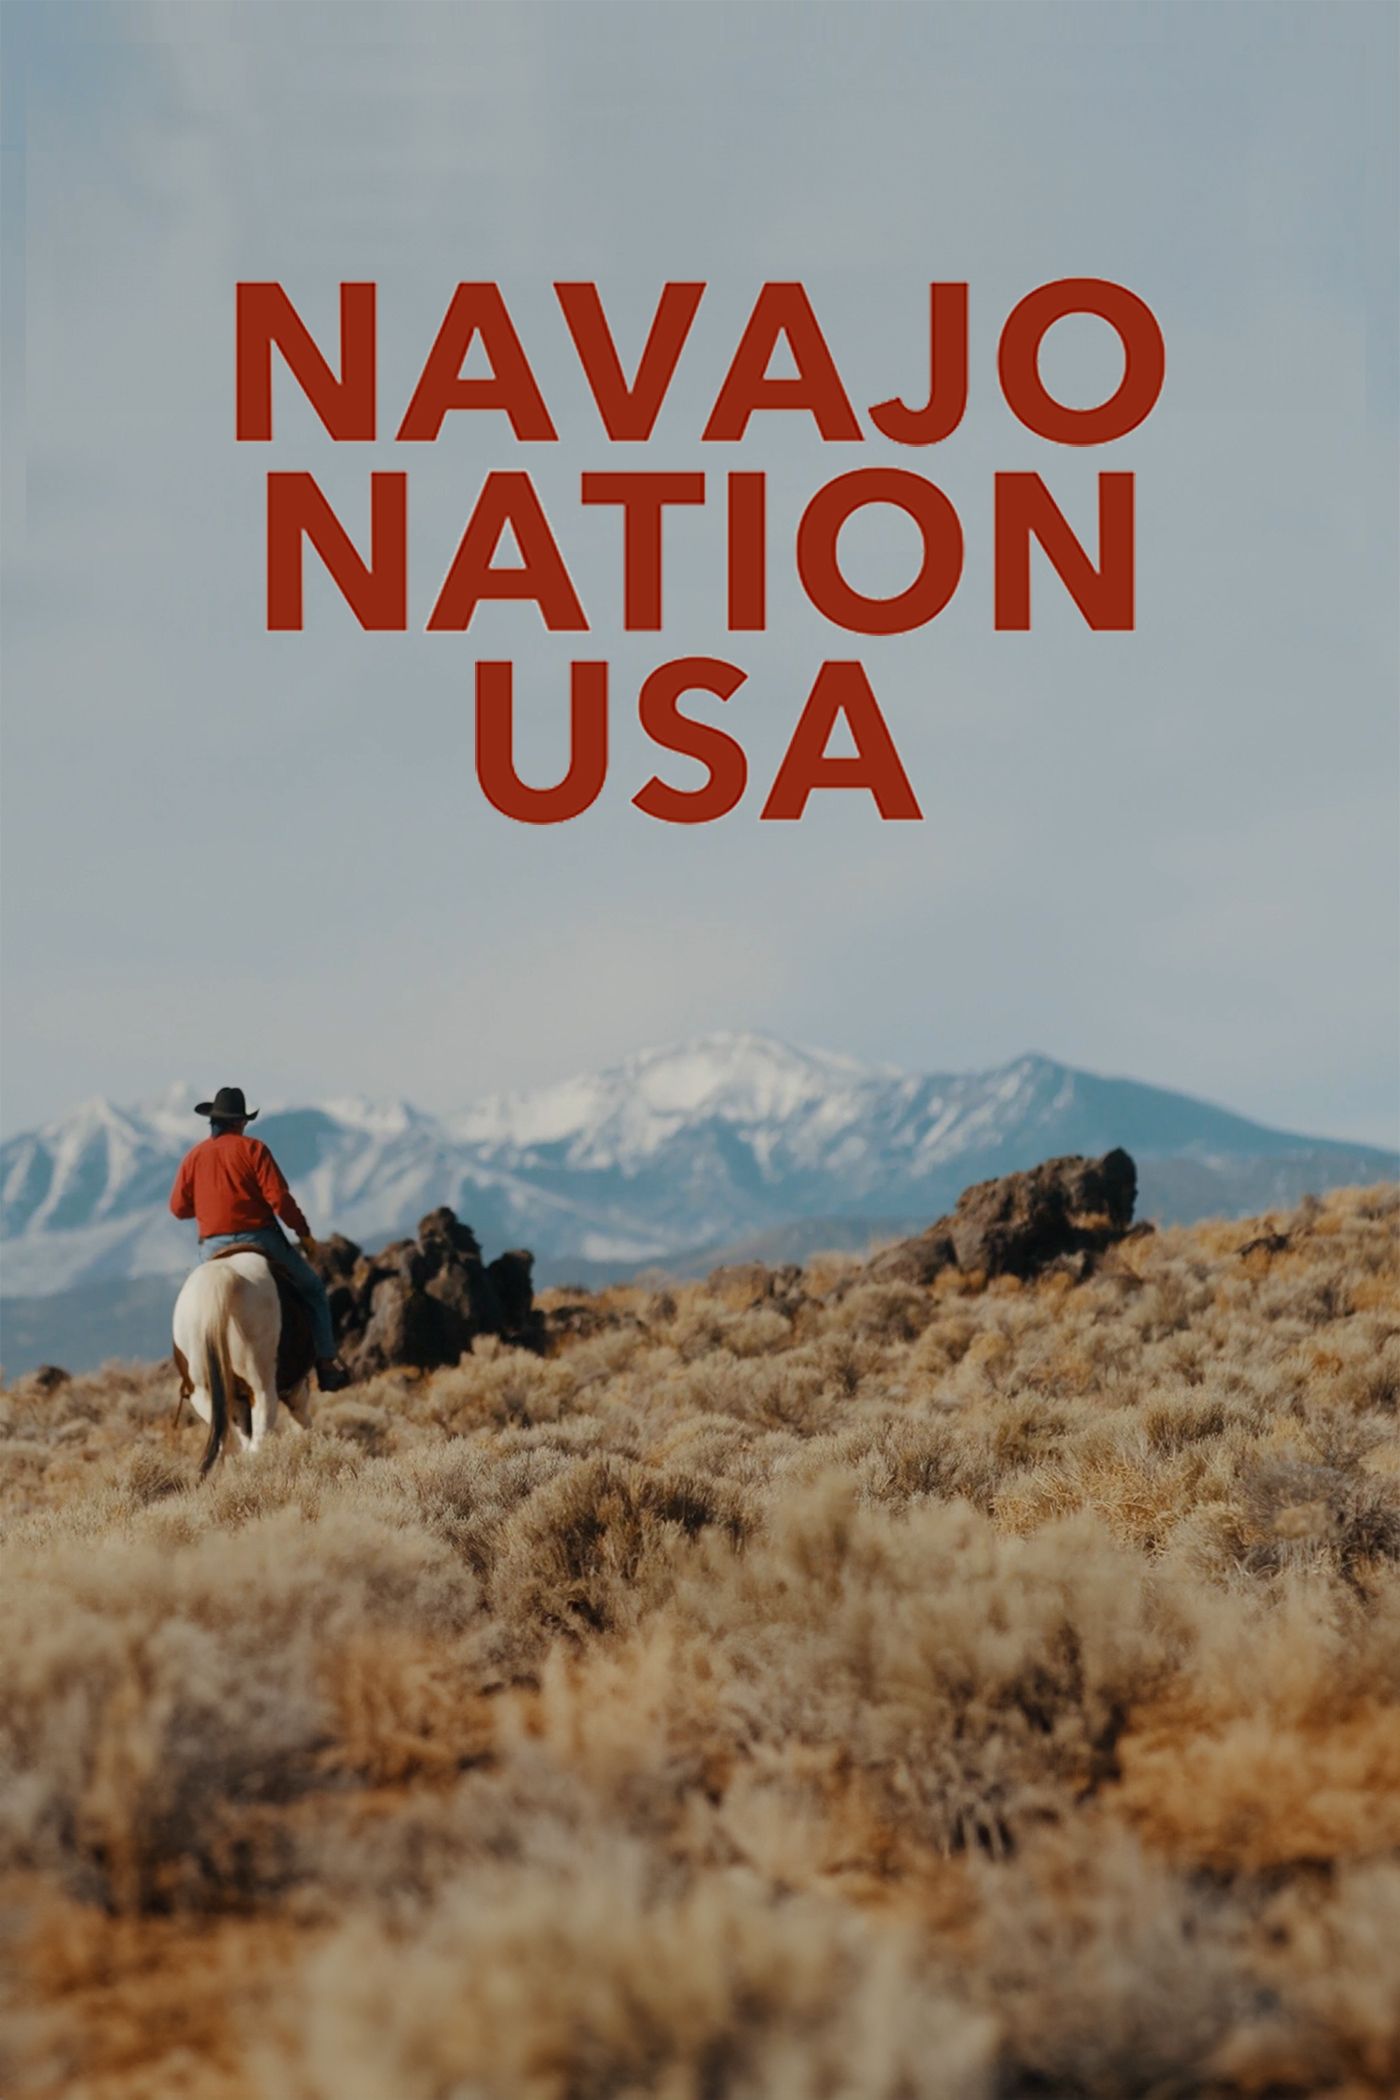 Navajo Nation USA